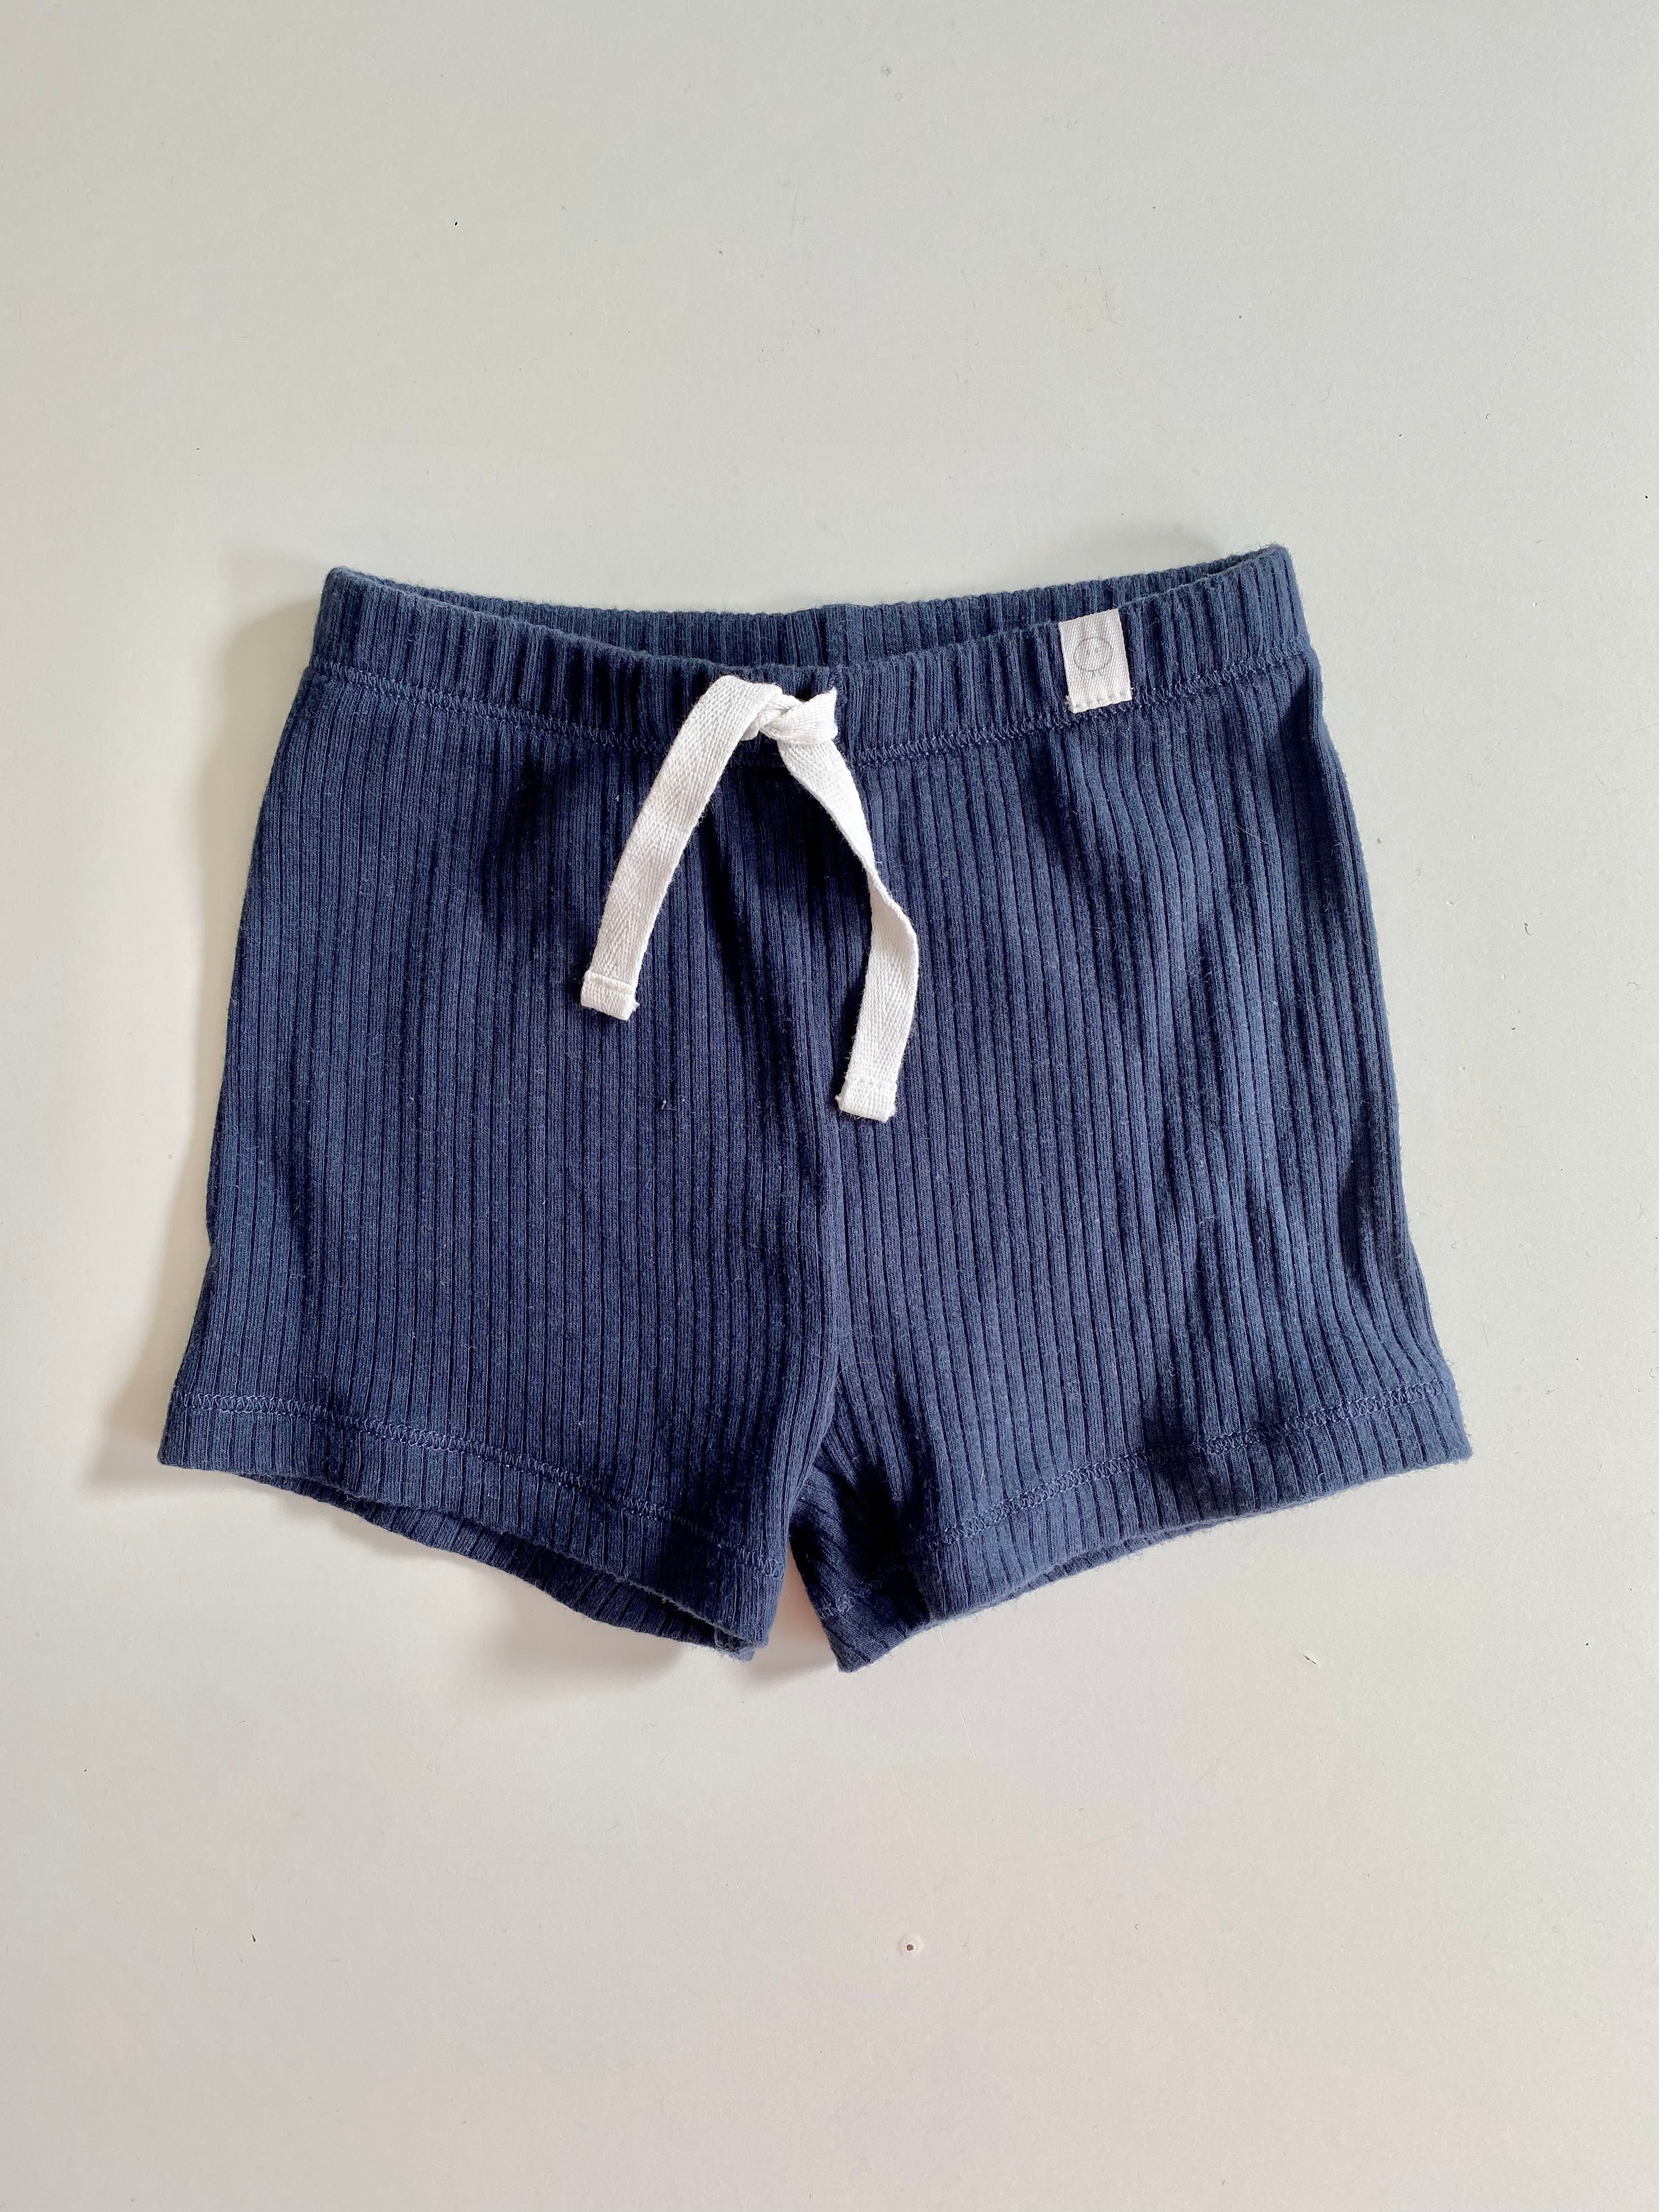 Mori Baby Organic Ribbed Cotton Shorts 3-6 Months